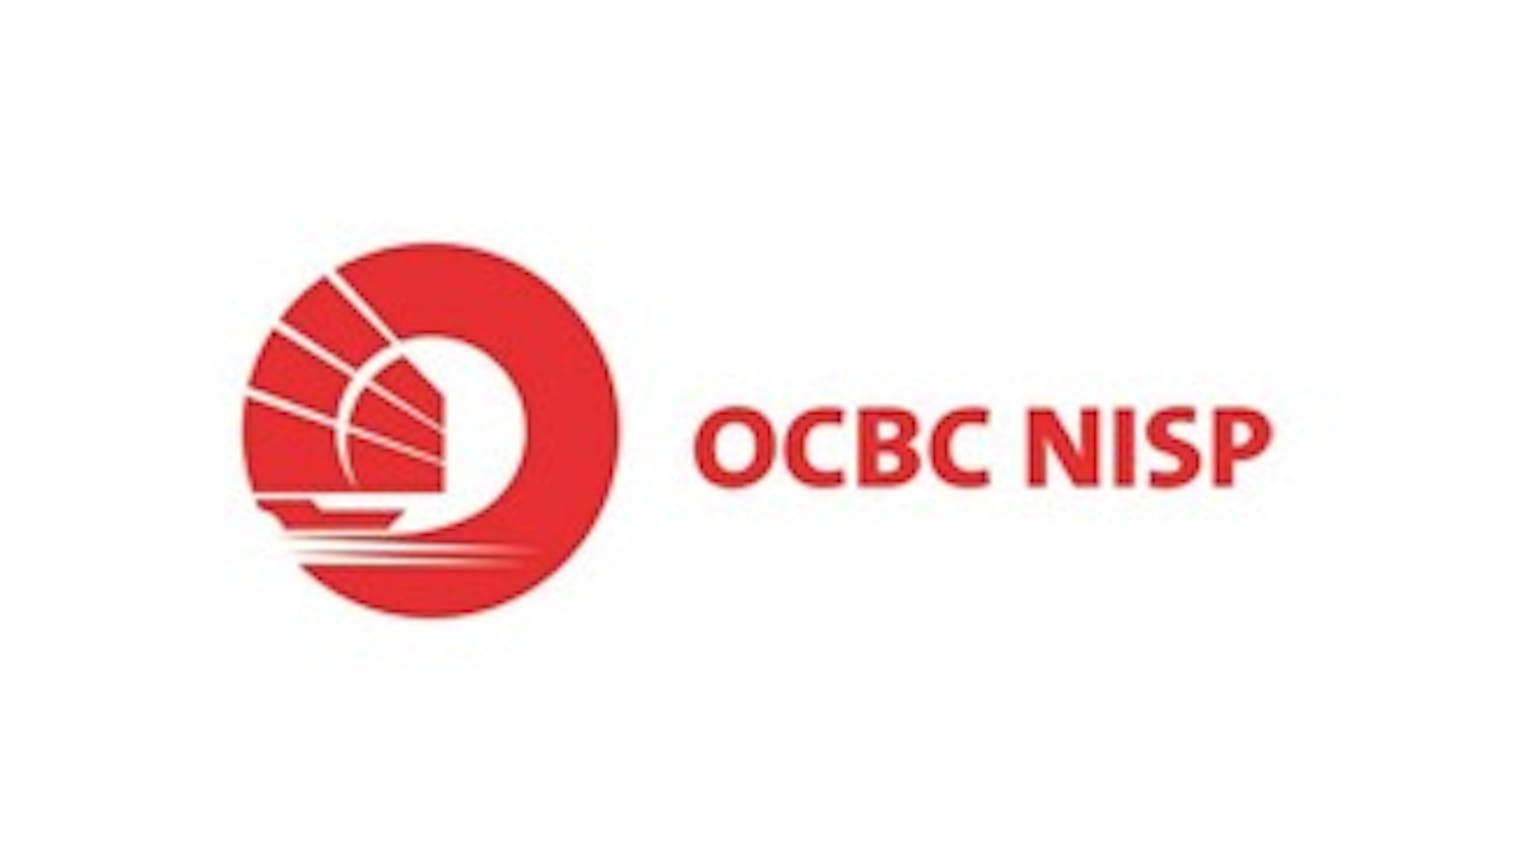 OCBC NISP 90°N